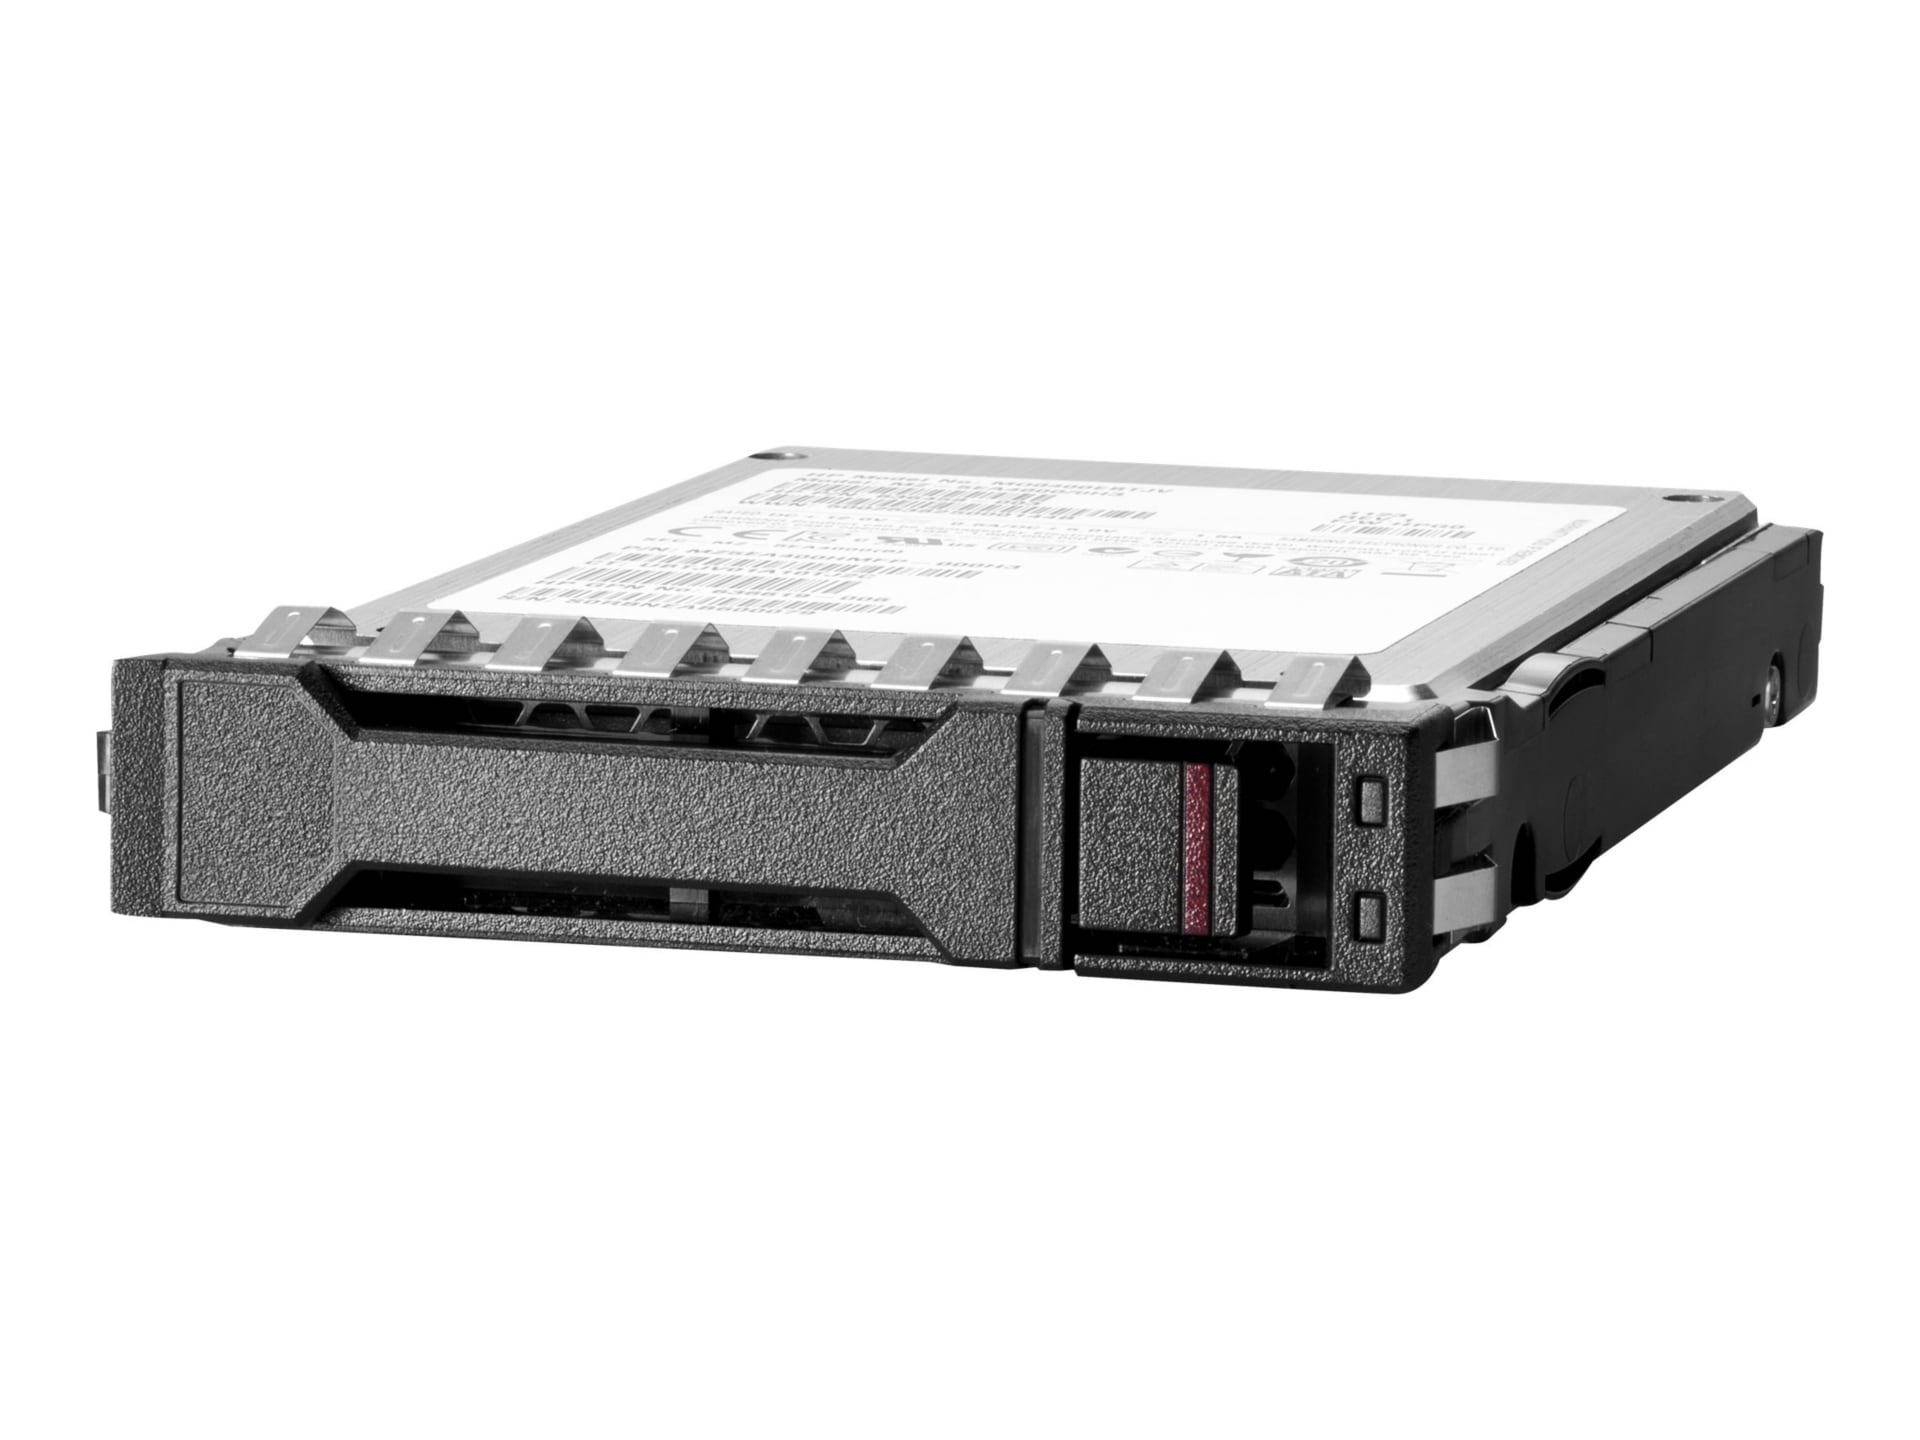 HPE Mission Critical - hard drive - 300 GB - SAS 12Gb/s